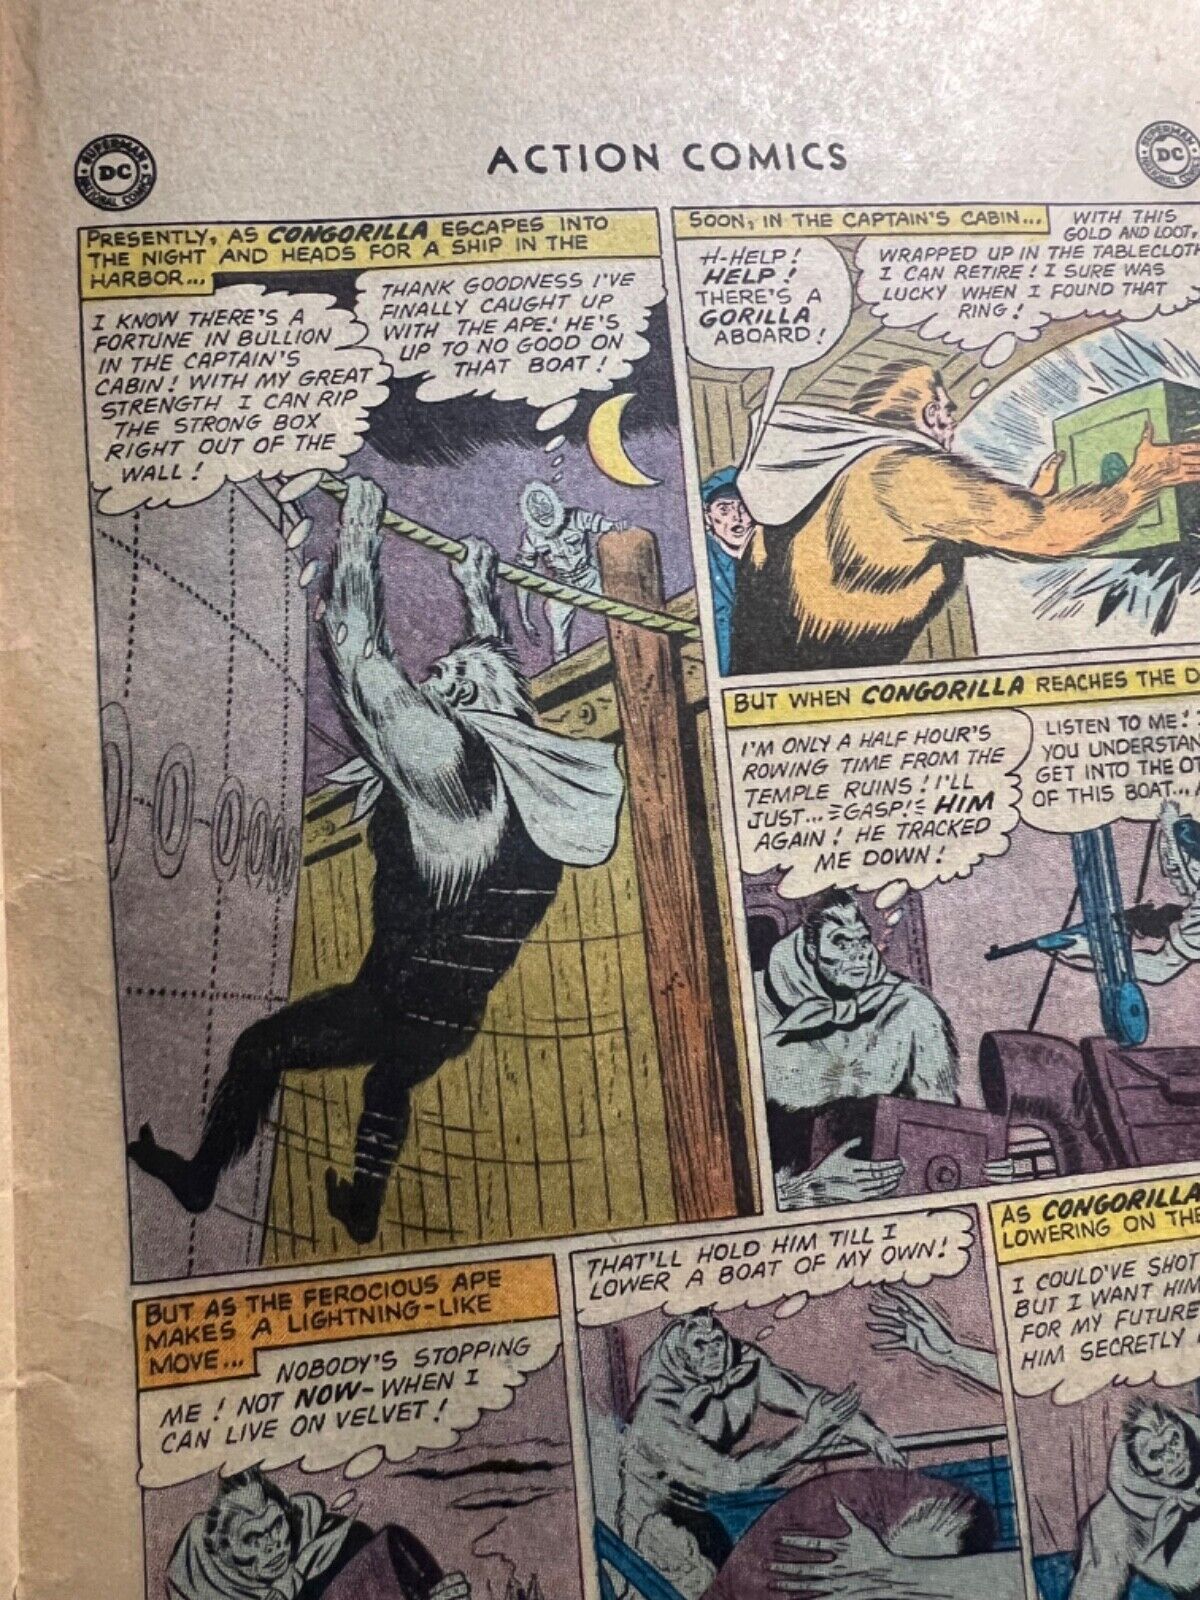 Action Comics #254 SUPERMAN 1st Appearance Origin of Bizarro #1 1959 DC